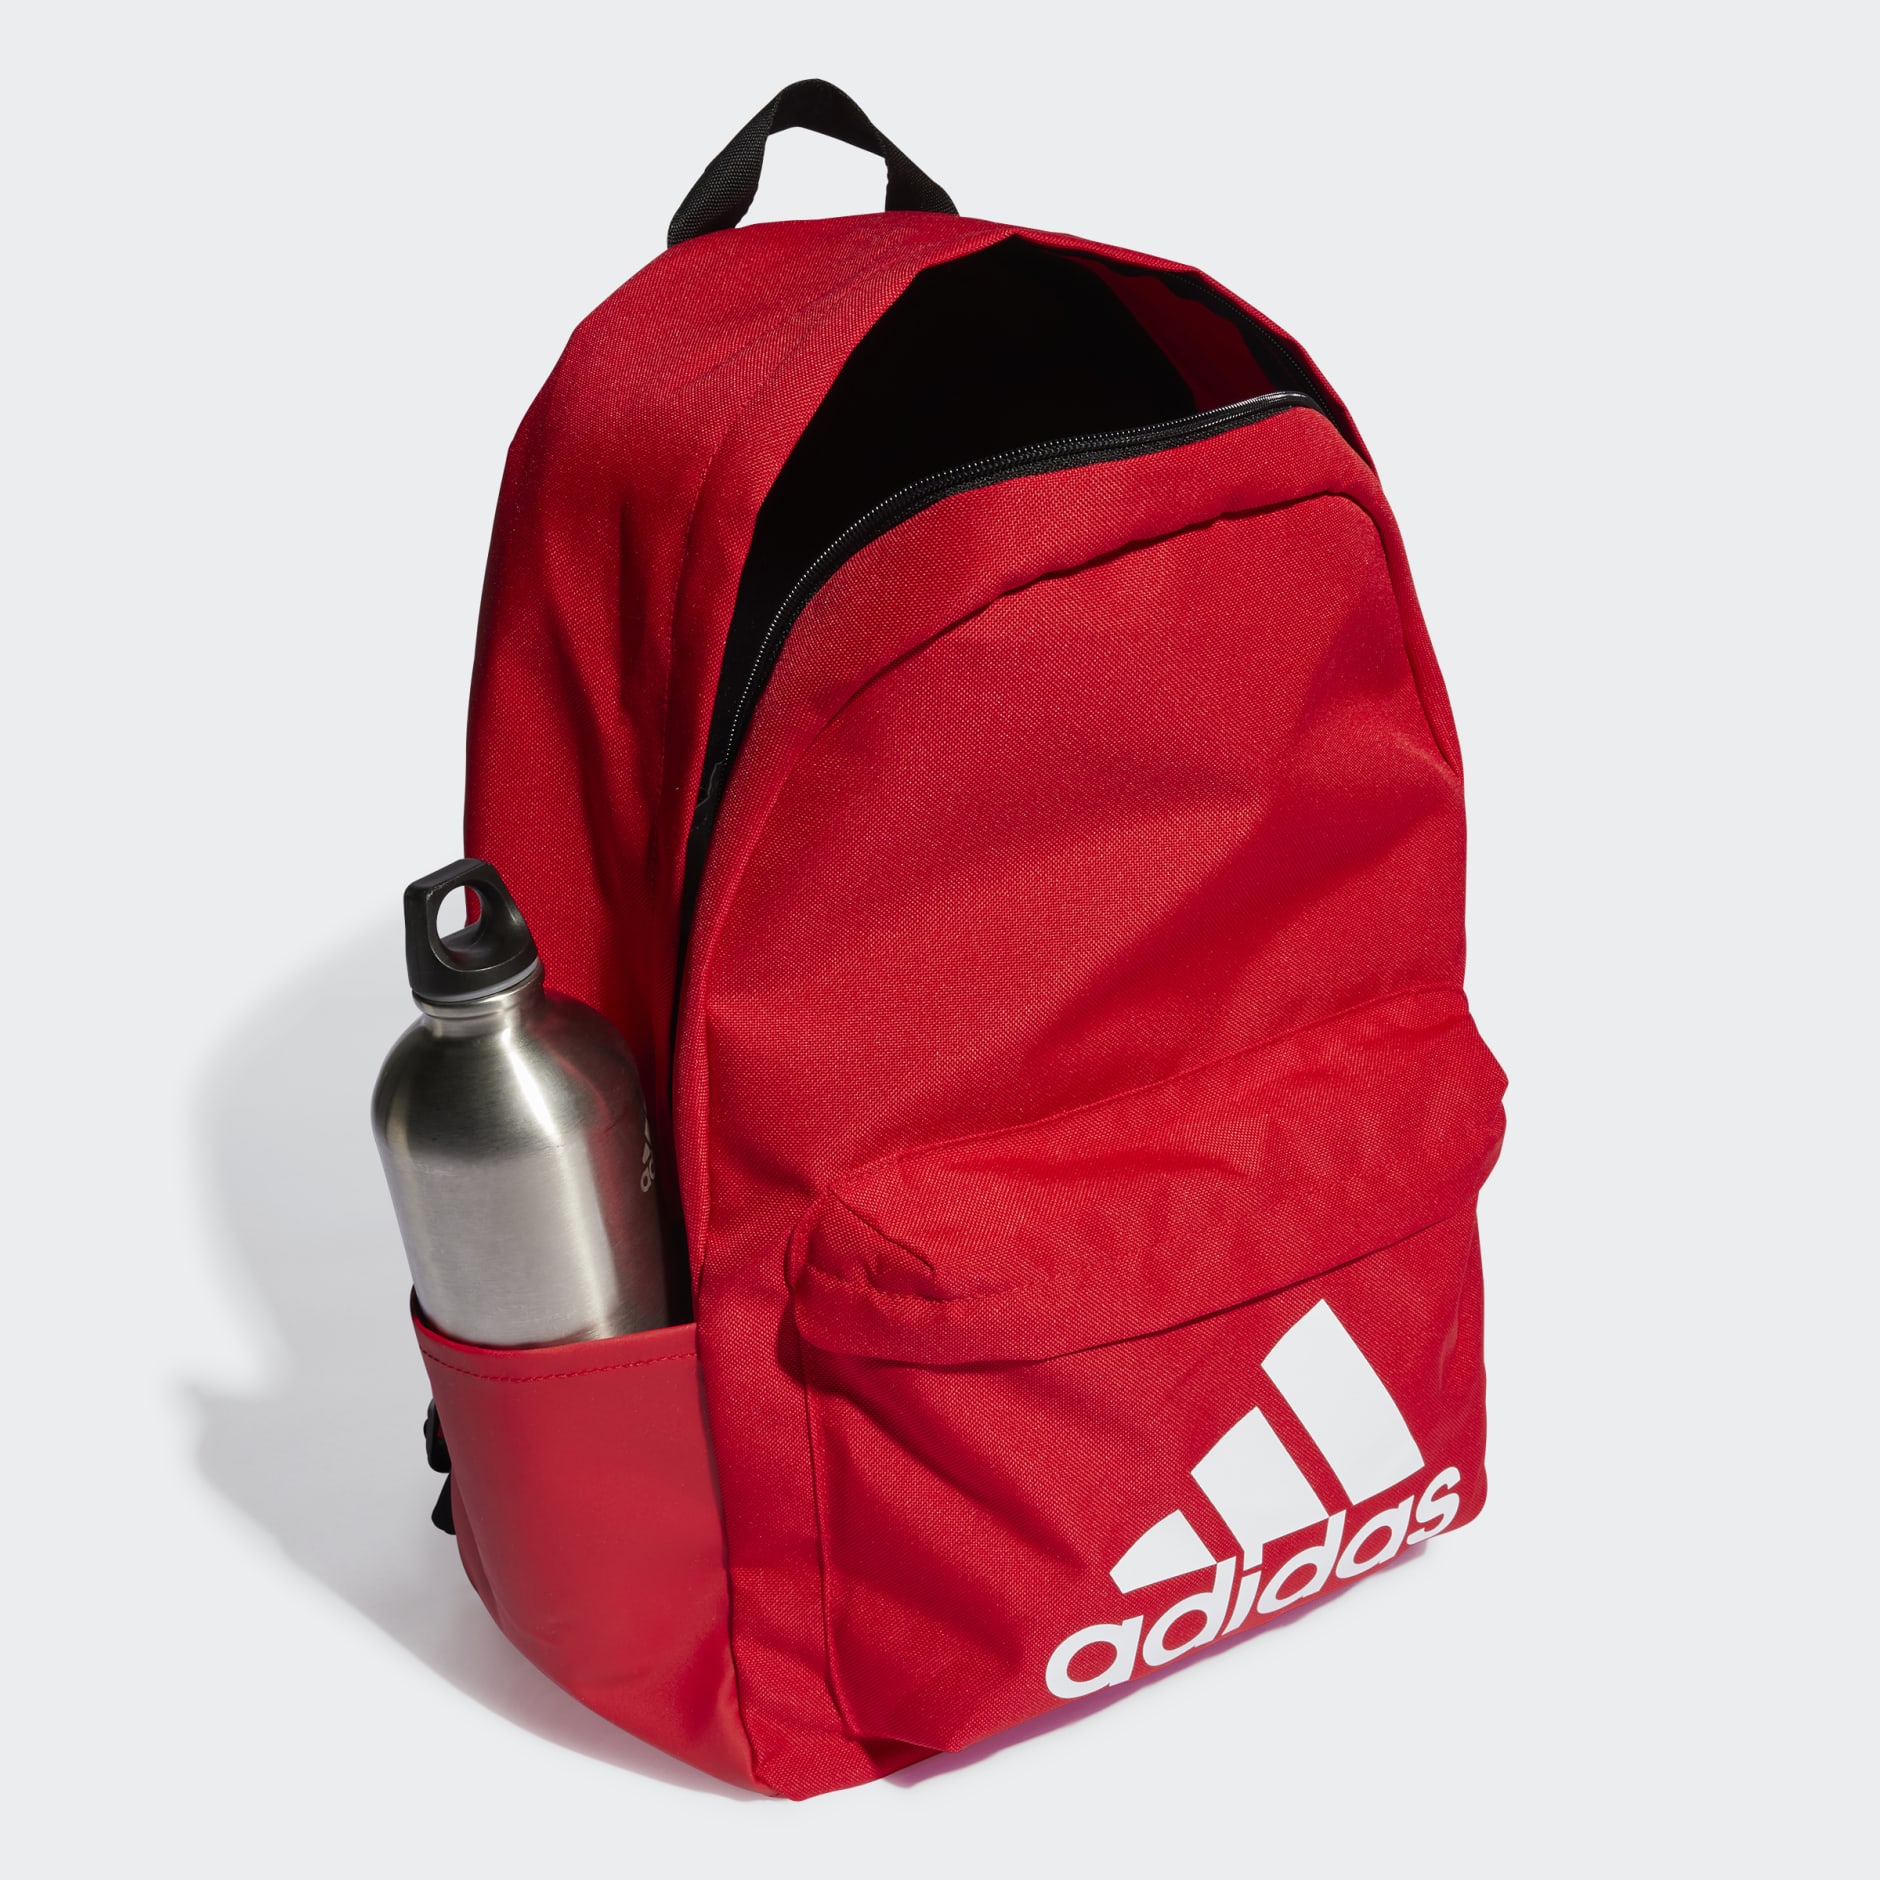 Adidas Ale Galan Bag Black Red | Adidas